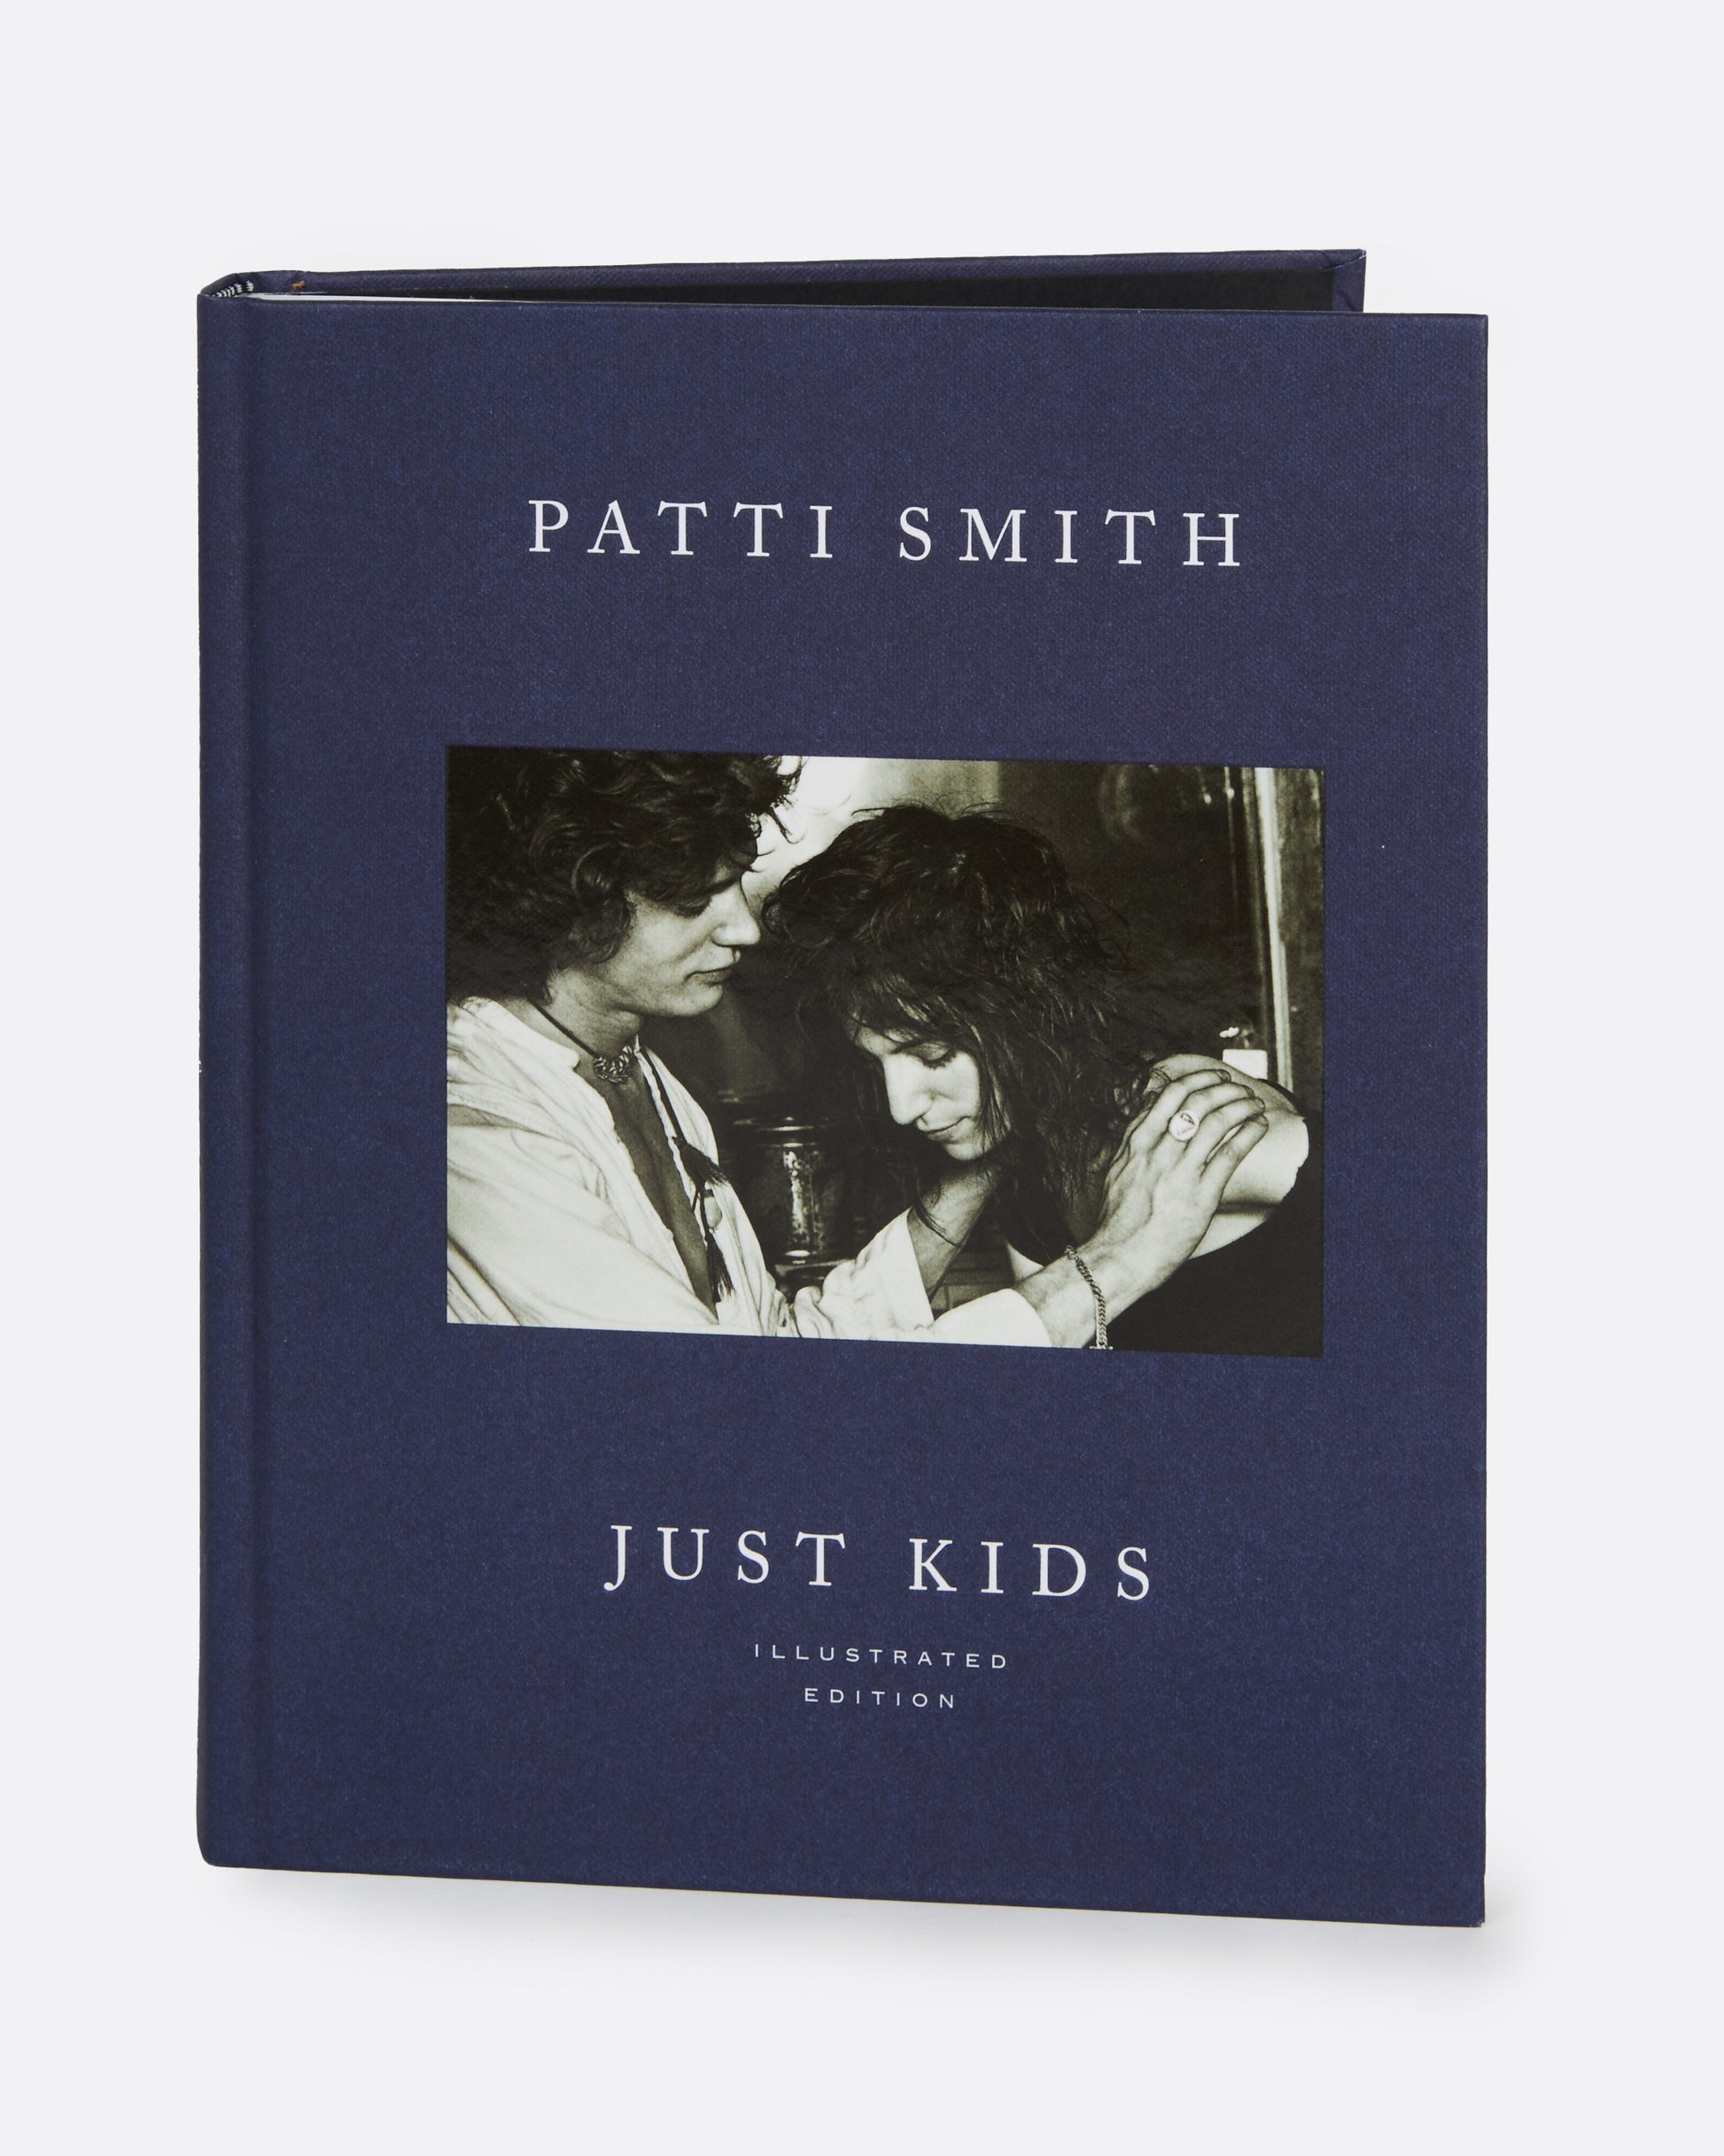 Patti Smith's award winning memoir with never-before-seen photographs.